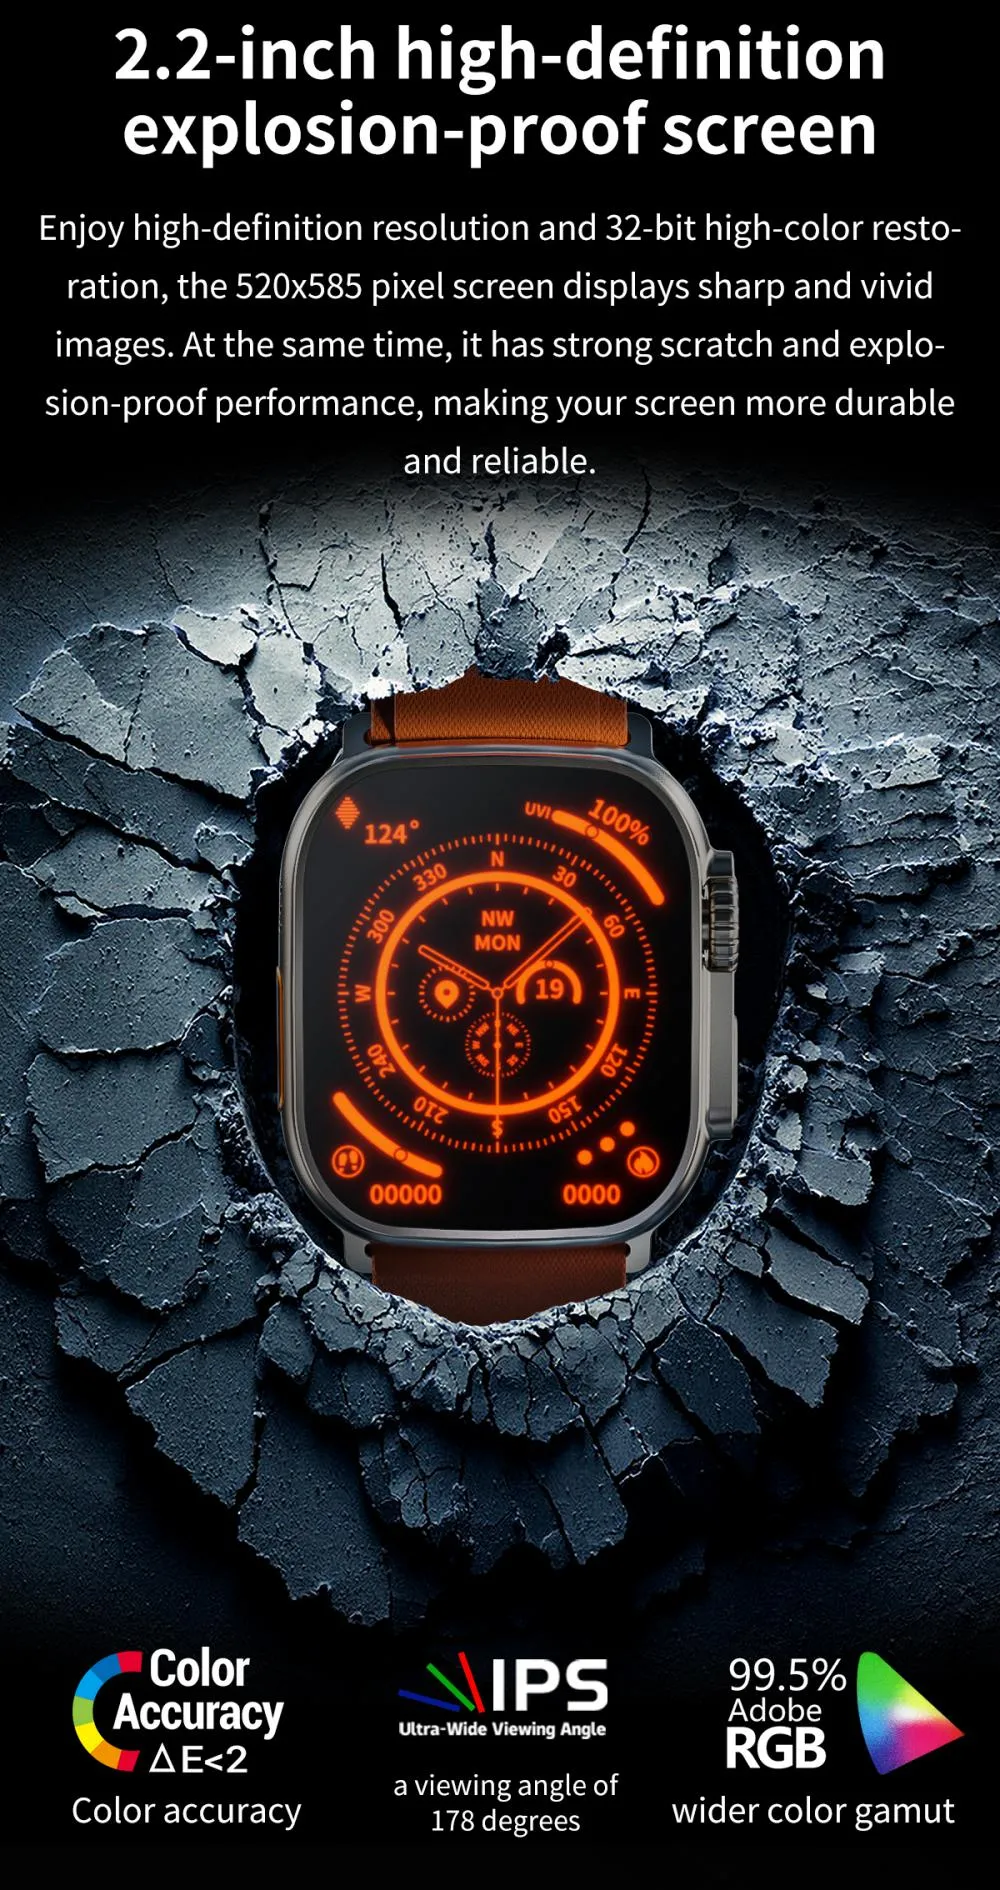 Zordai ZD8 Ultra Max Plus Smart Watch